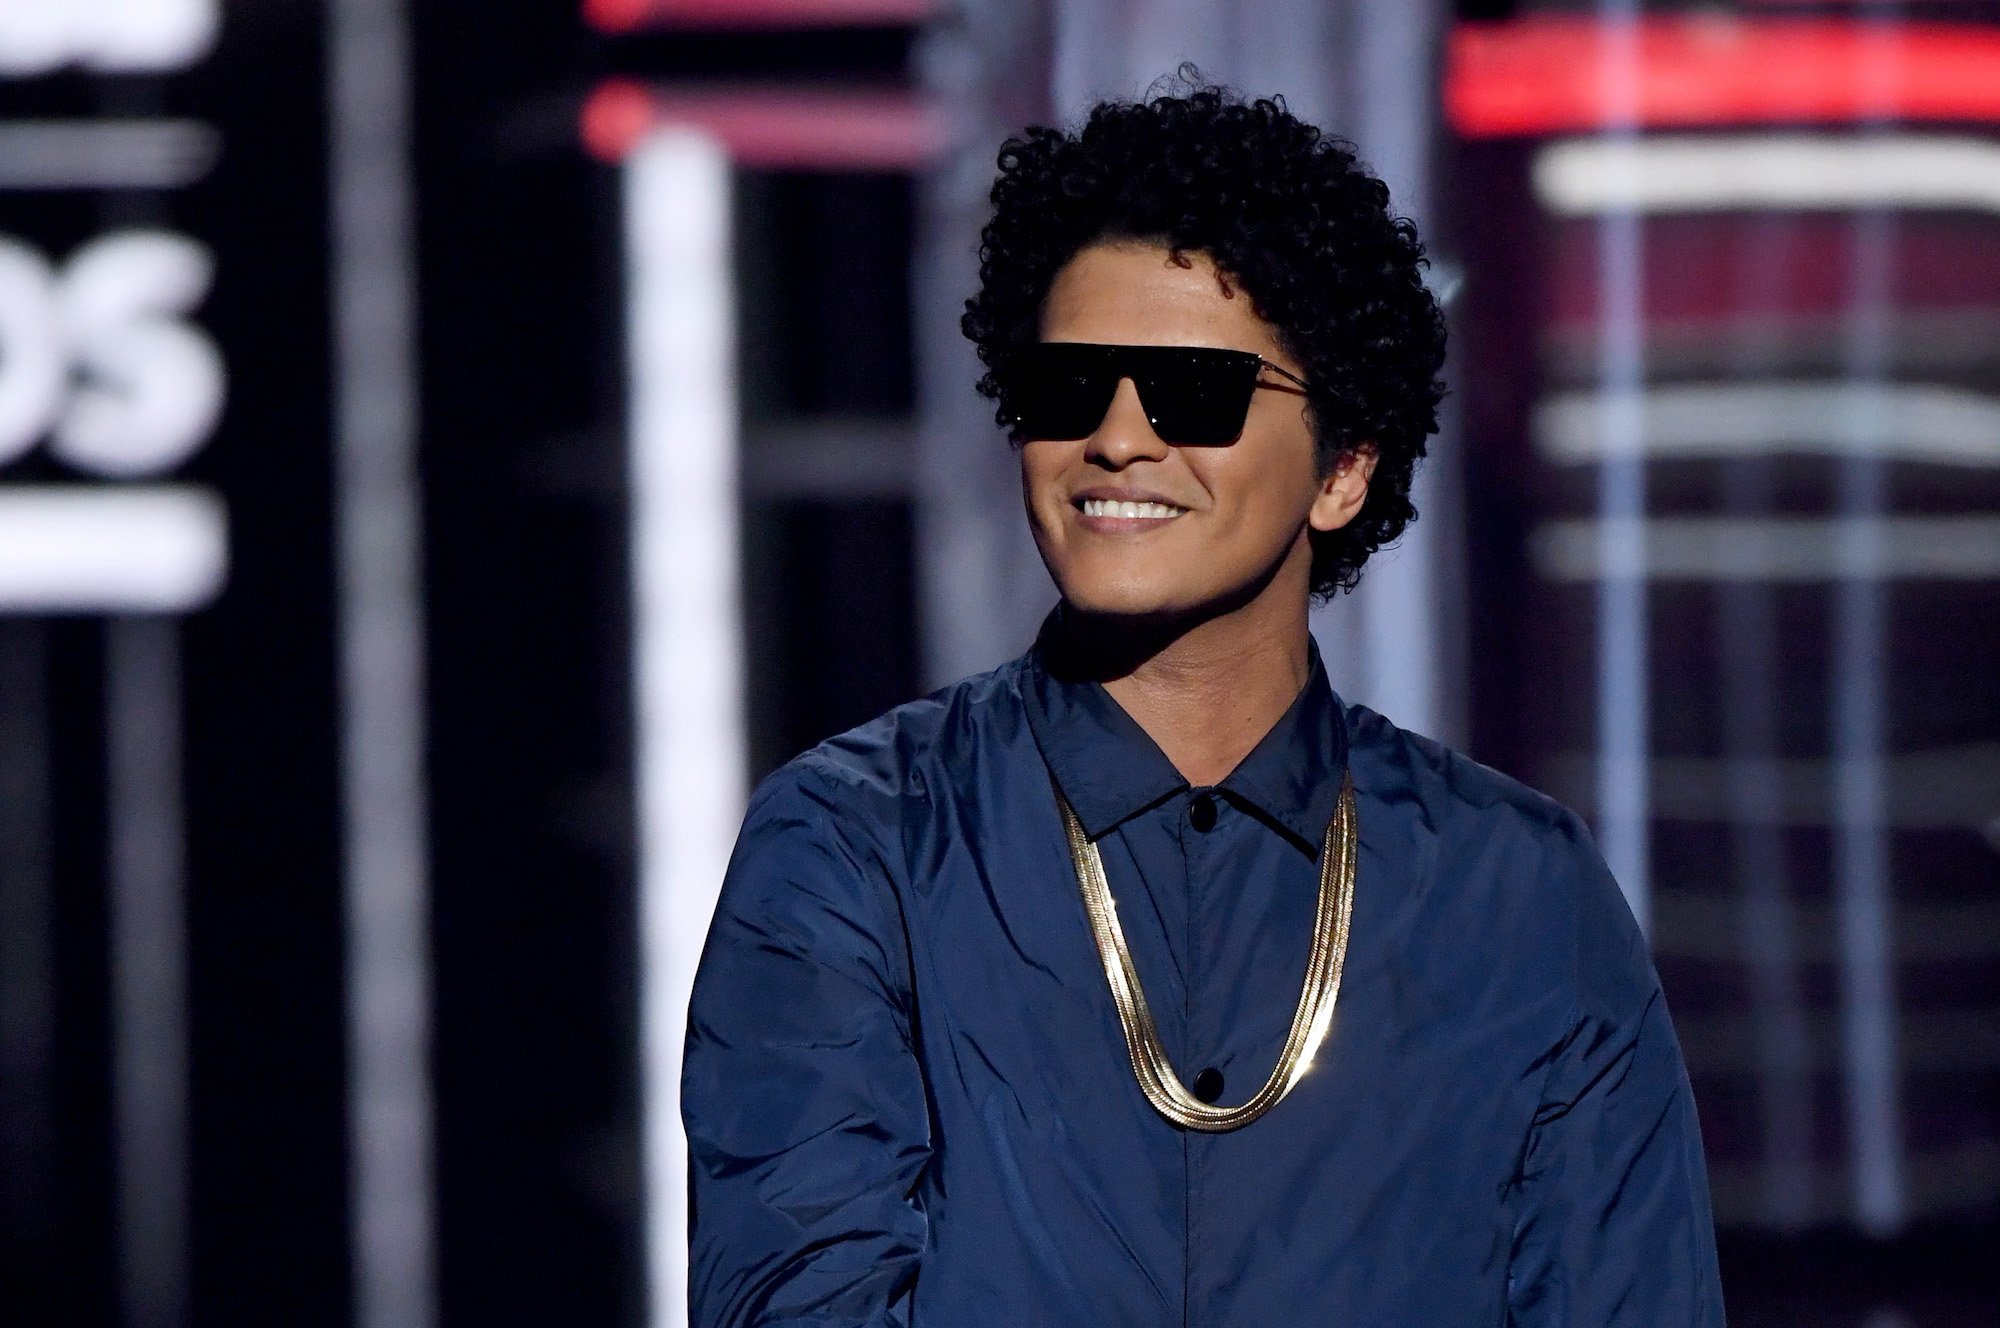 How Many Grammy Awards Does Bruno Mars Have?